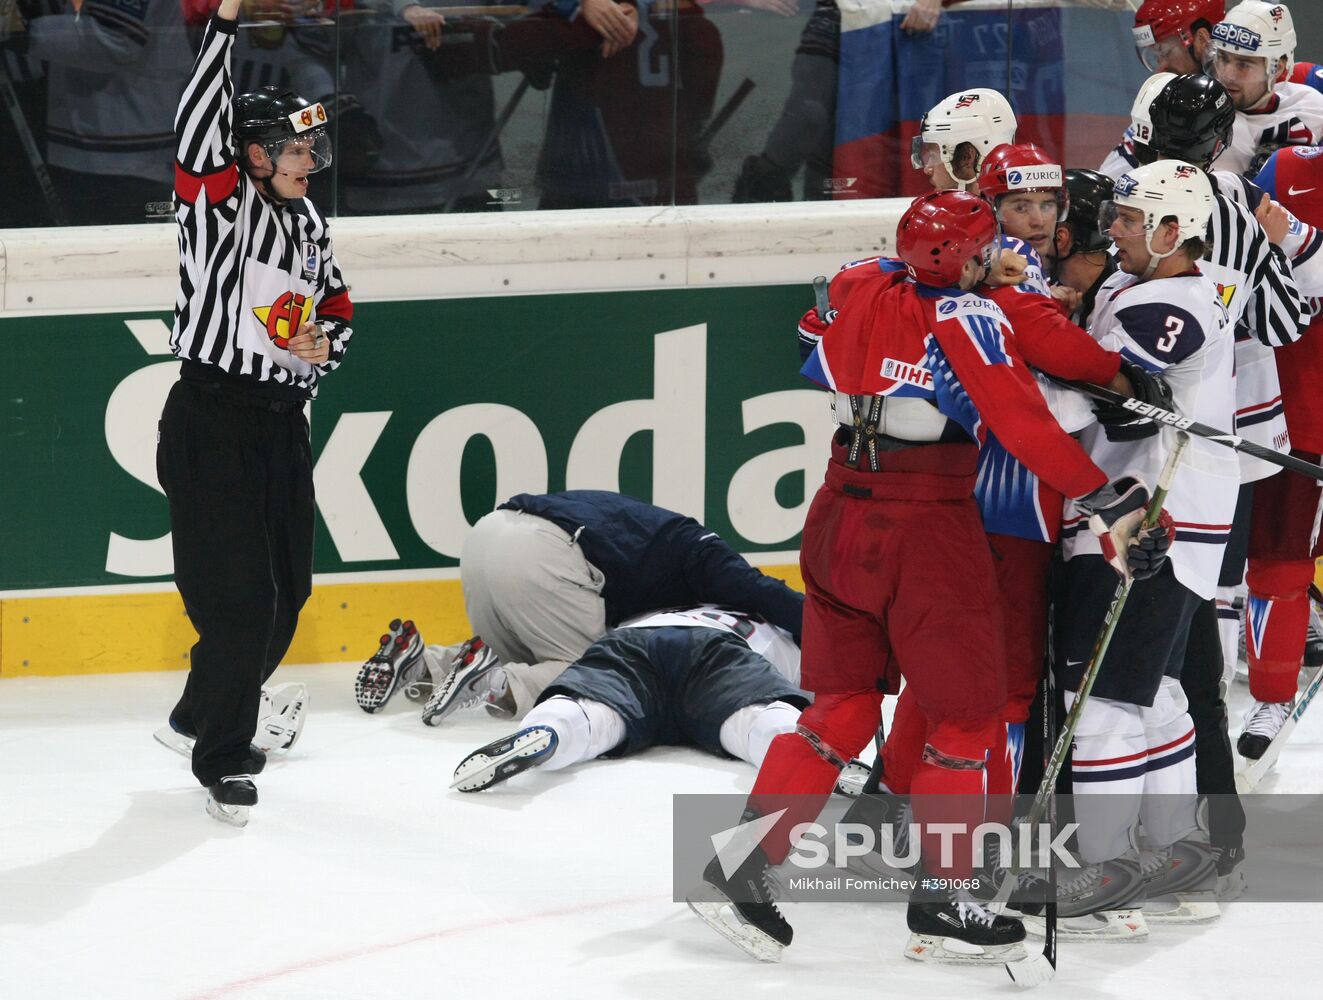 2009 Ice Hockey Championship. Russia vs. USA